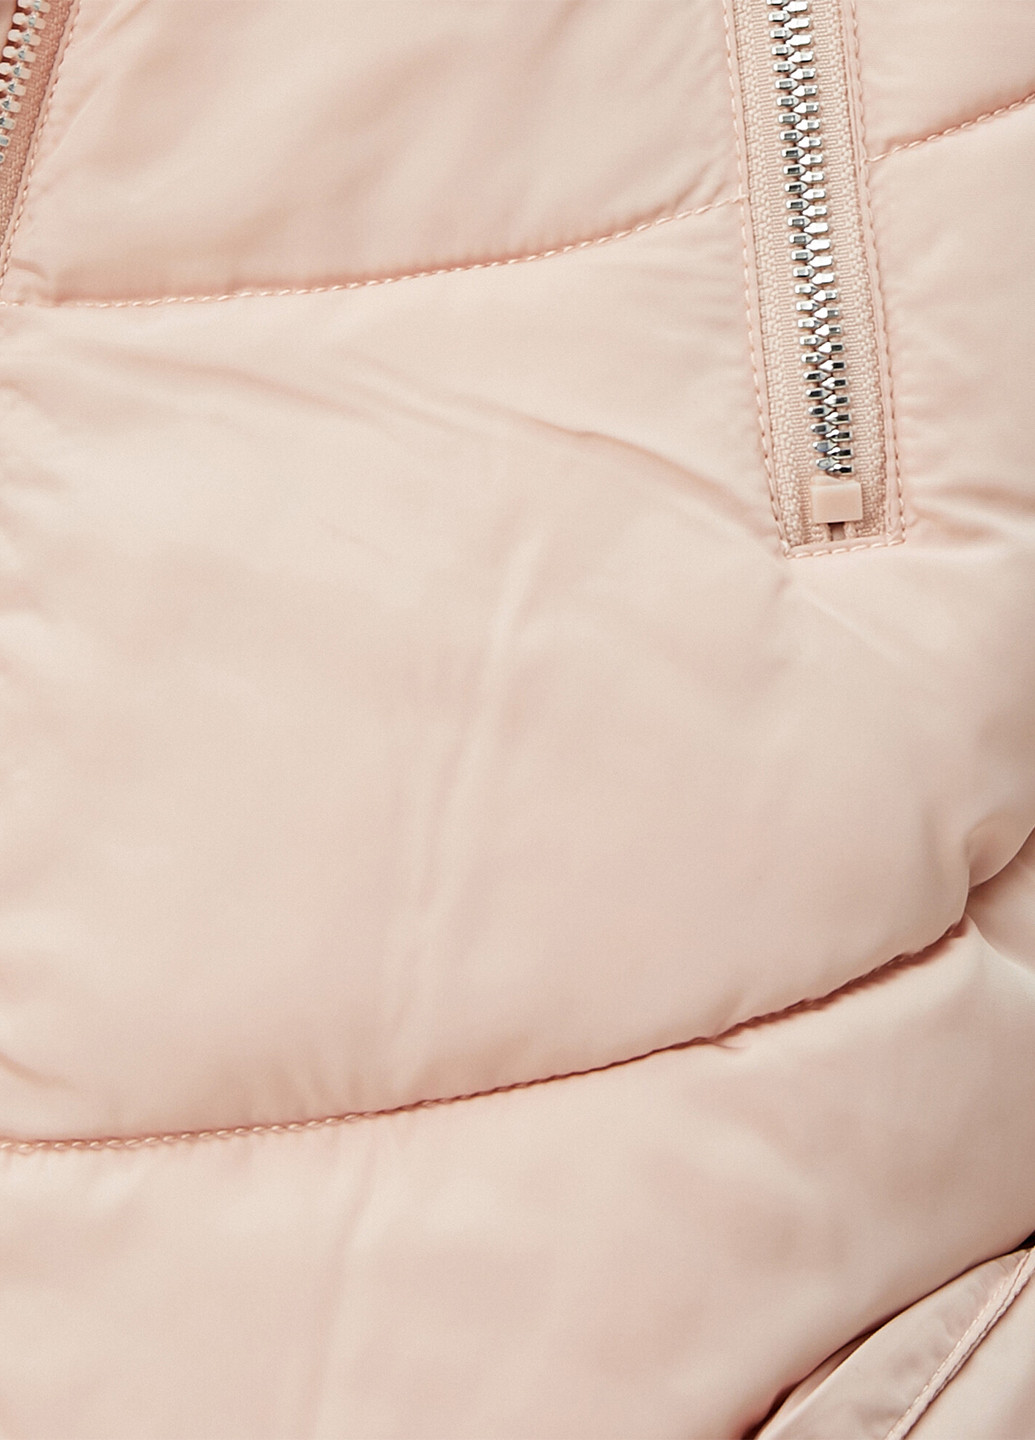 Светло-розовая зимняя куртка KOTON